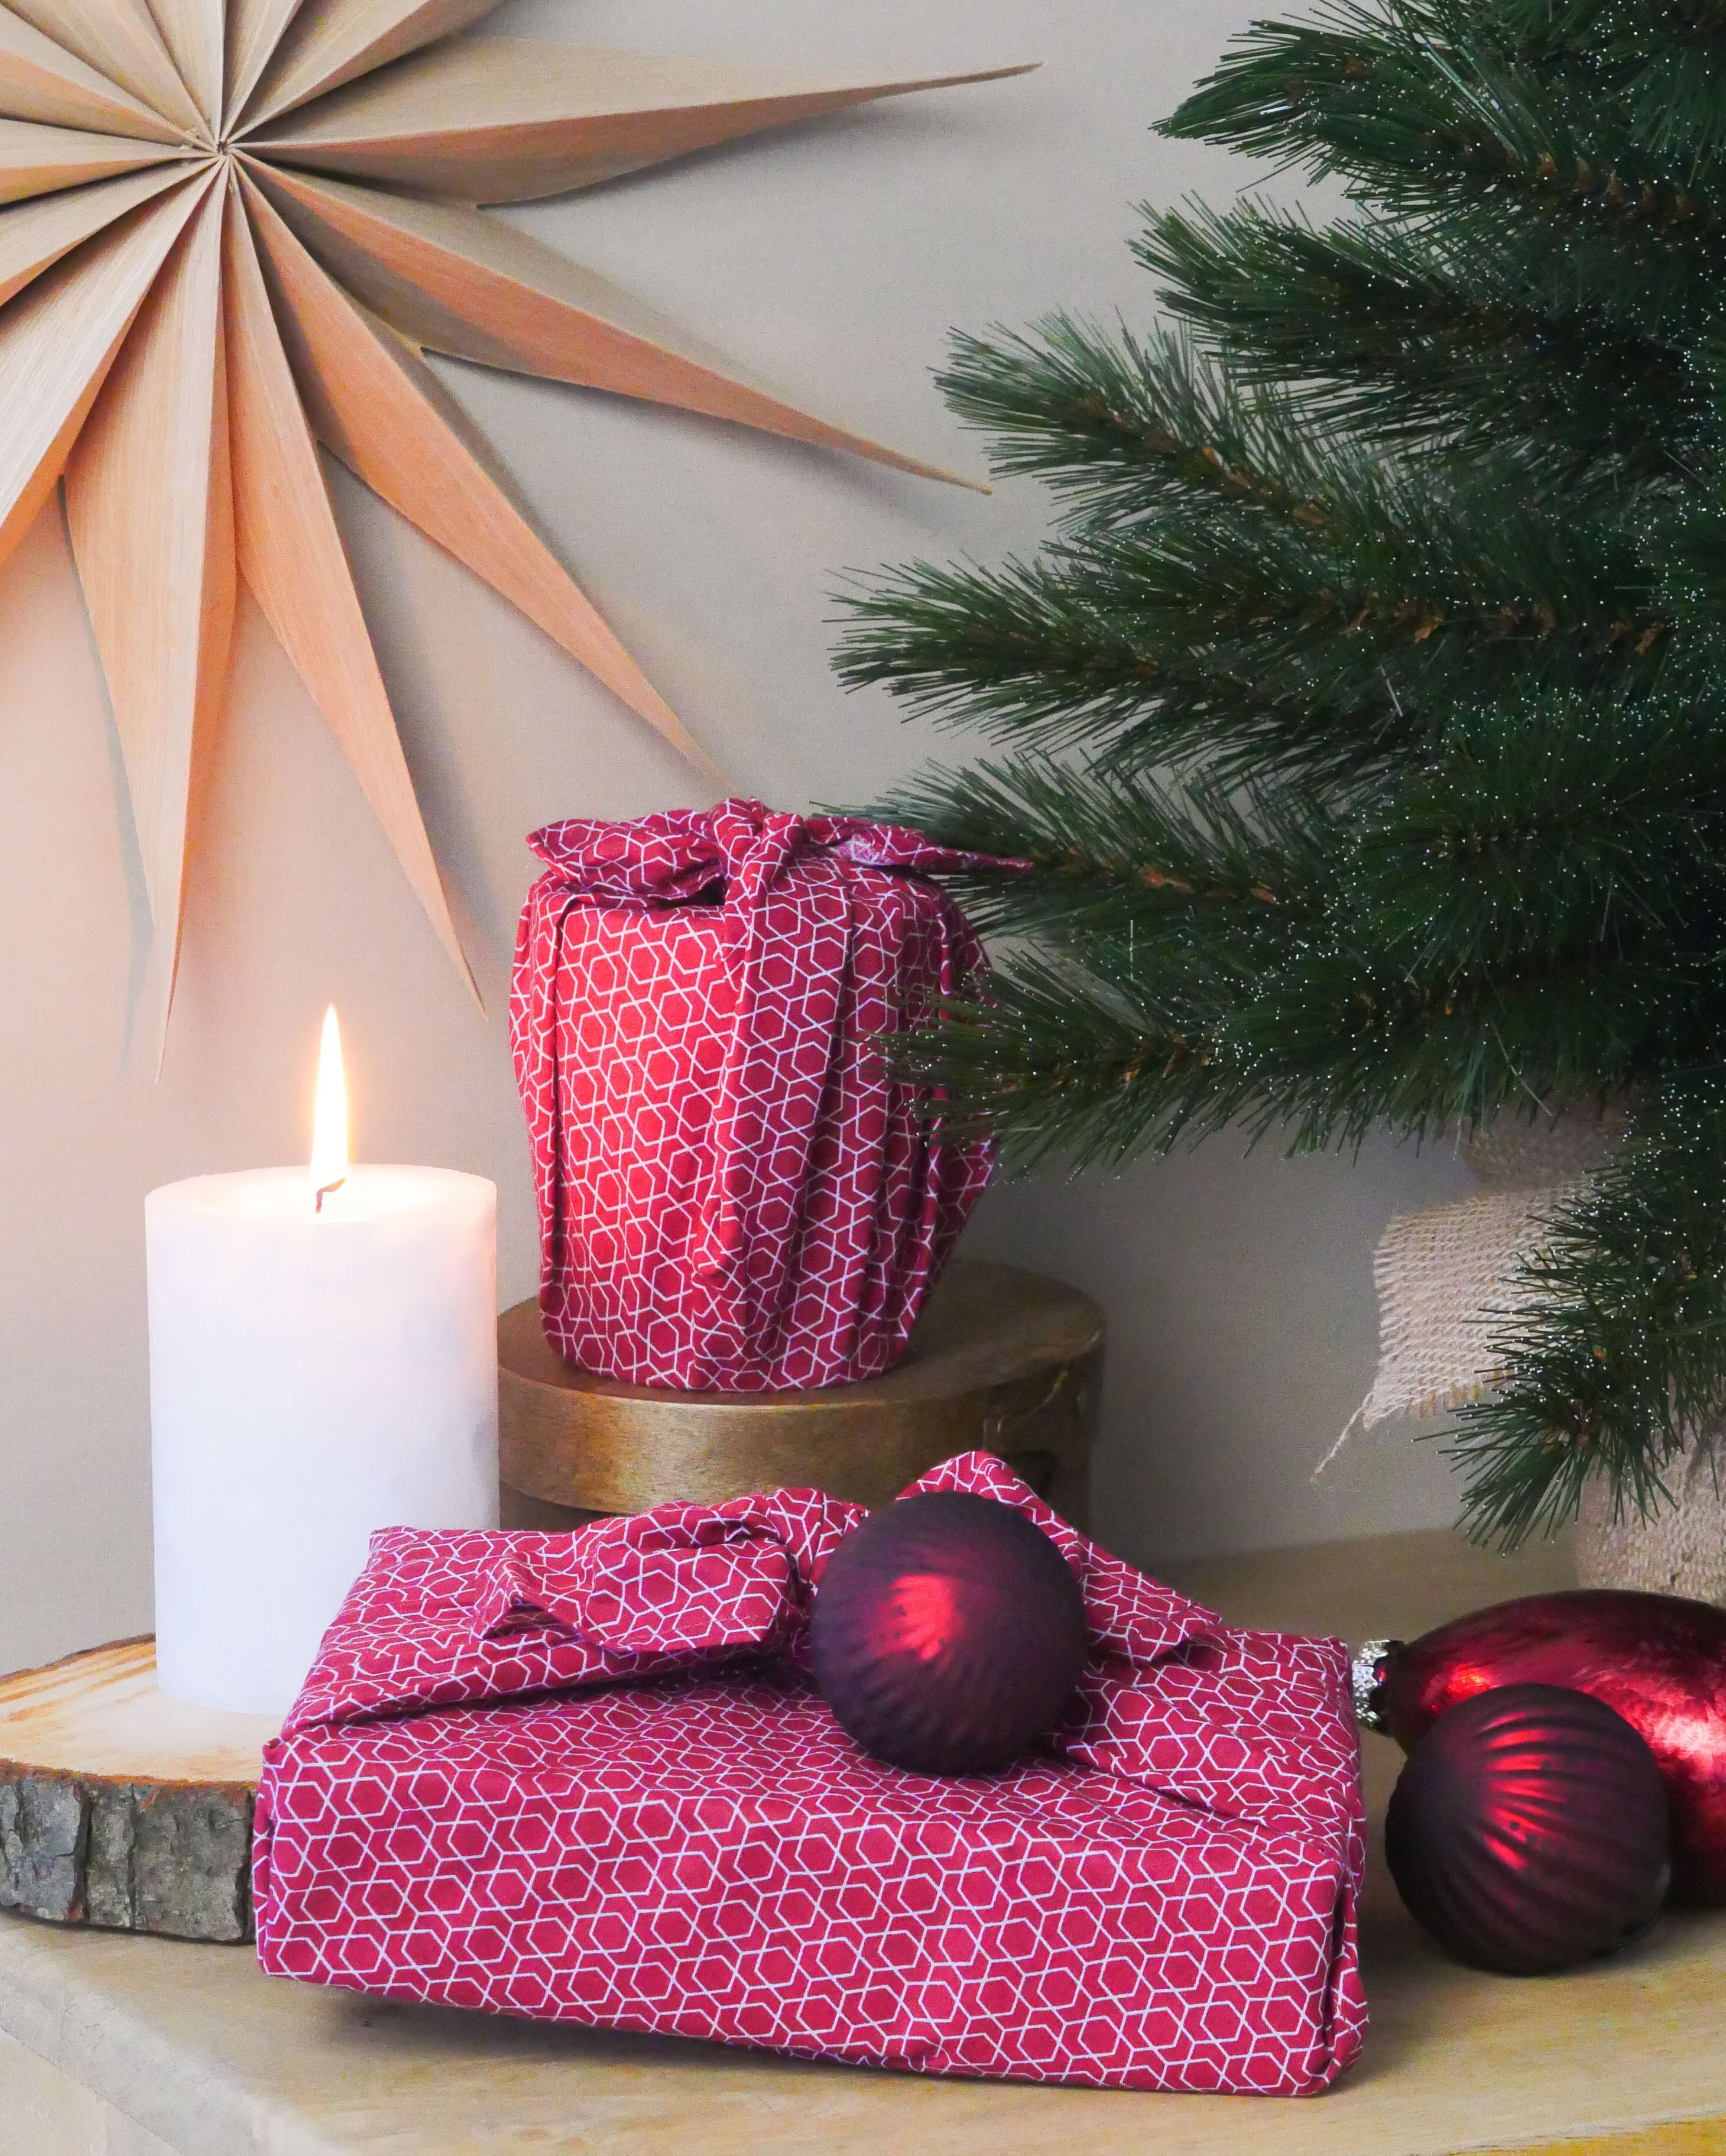 FabRap Cherry Single Sided / Furoshiki wrapping cloth / Reusable gift wrap / Eco-friendly alternative gift wrap